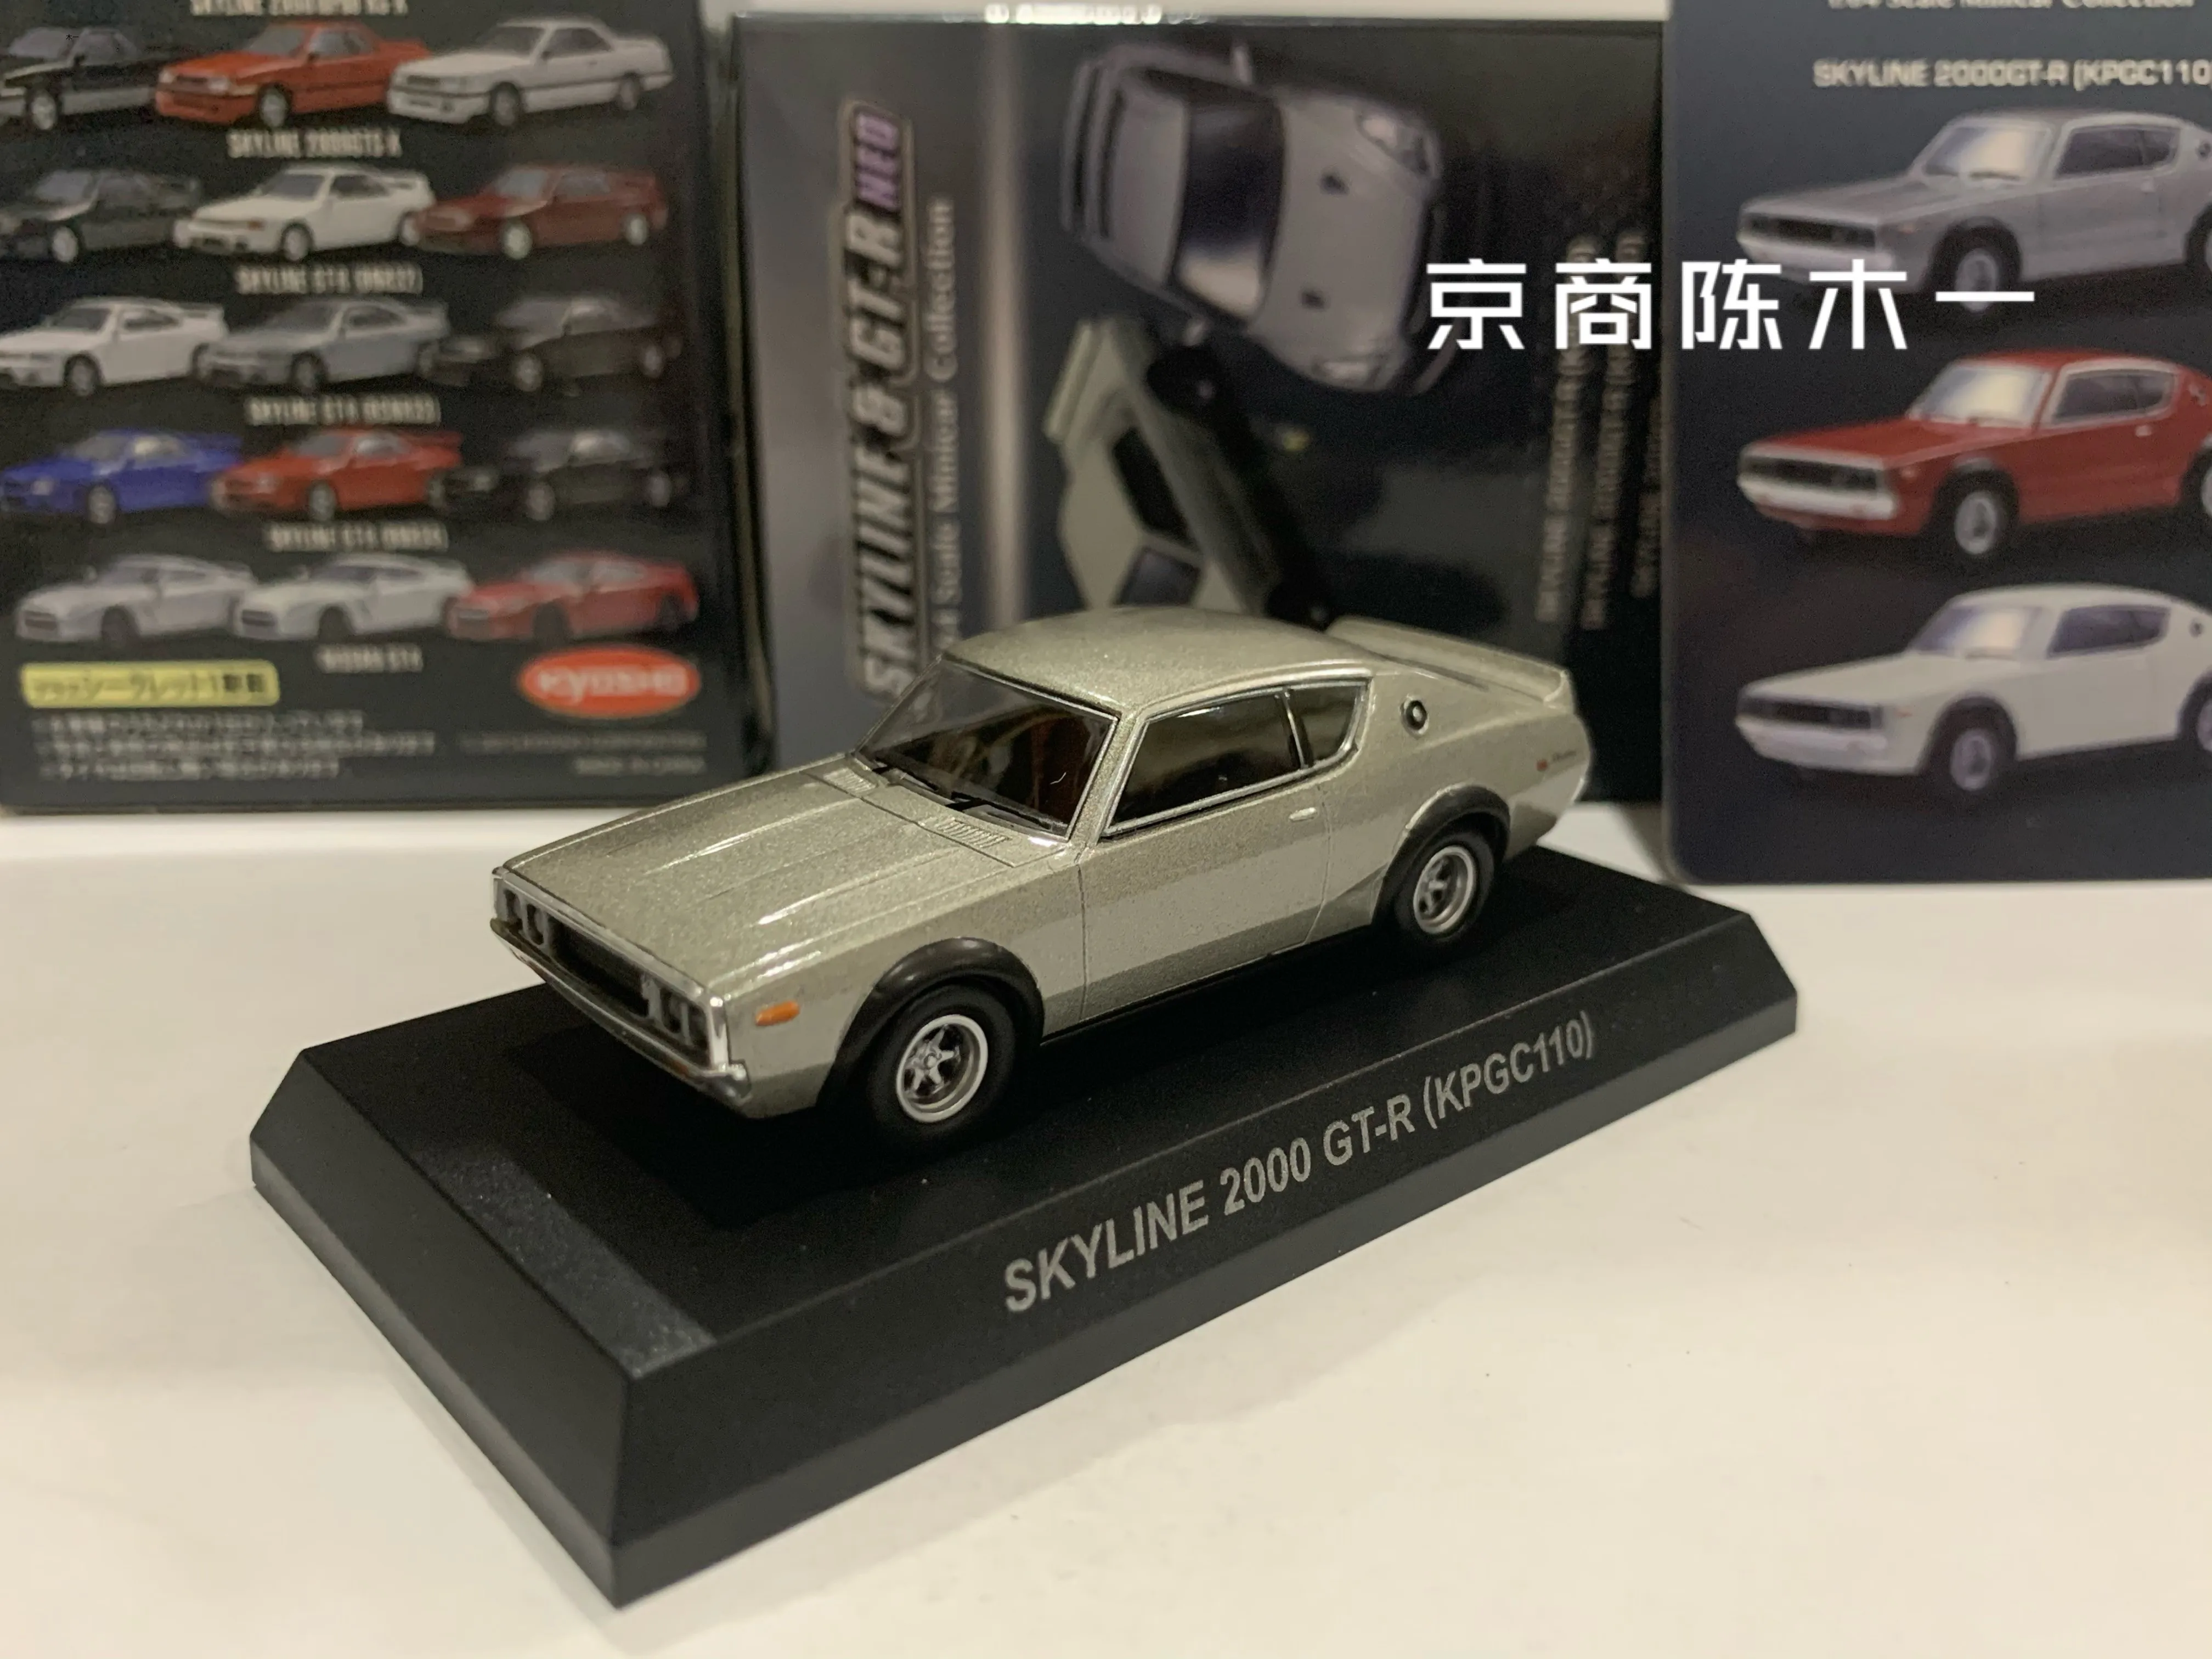 

1/64 KYOSHO Skyline GTR 2000 KPGC110 Collection of die-cast alloy car decoration model toys